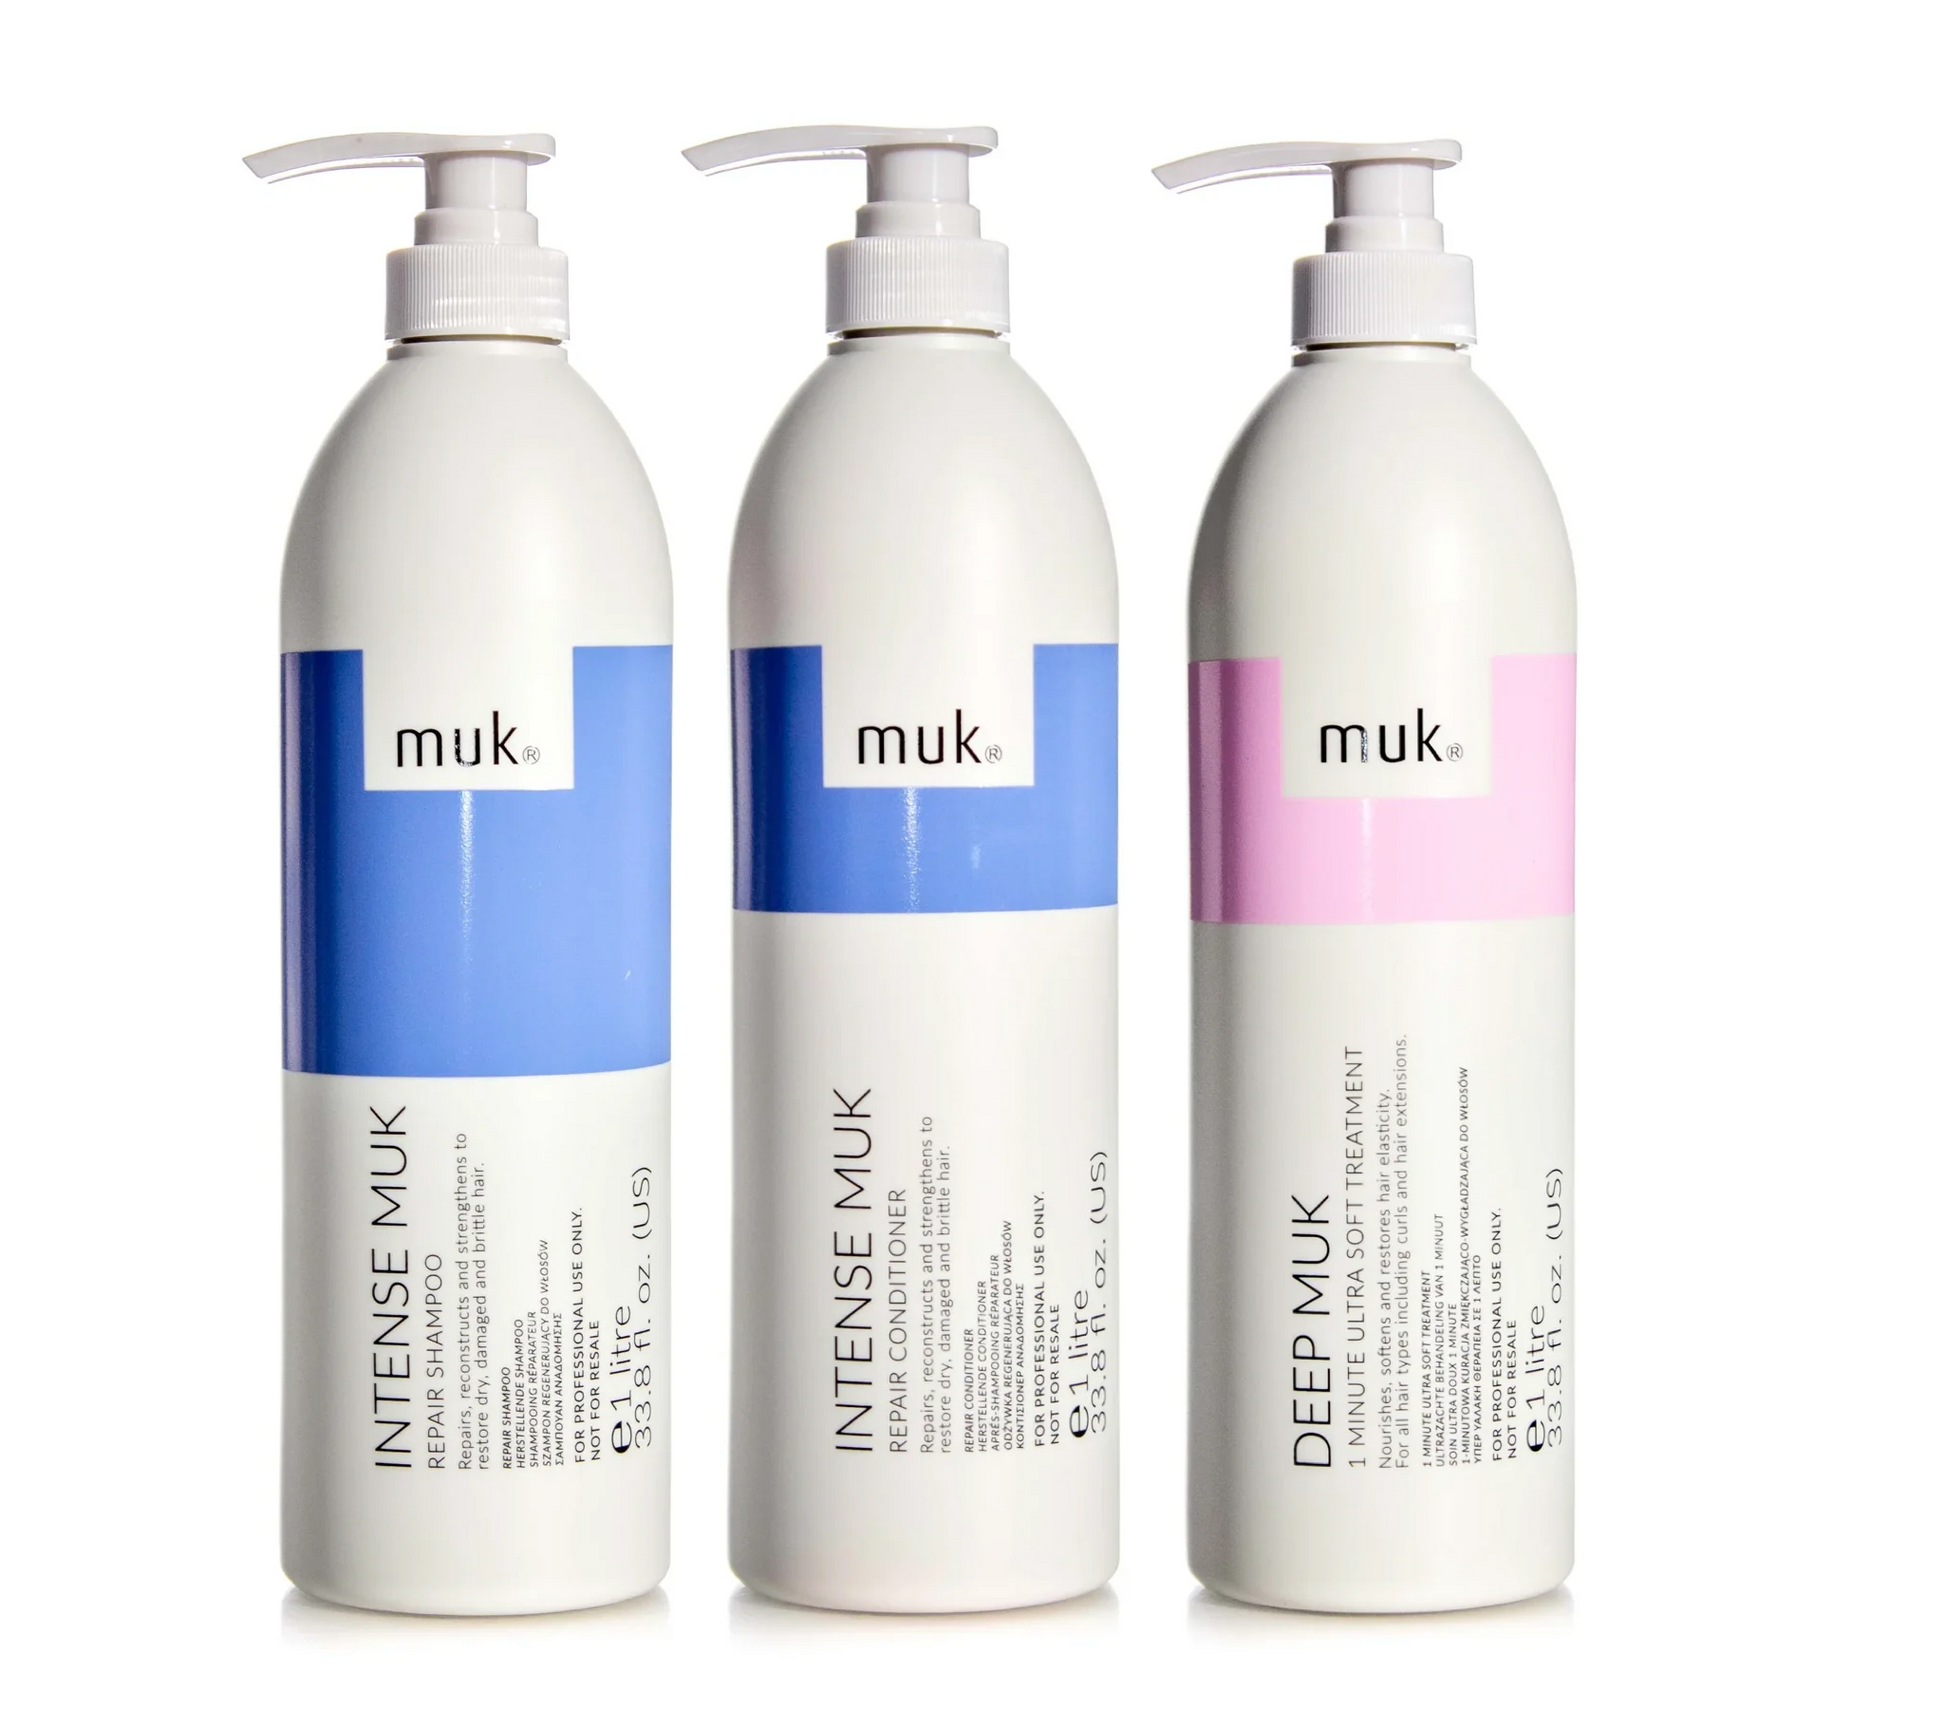 Muk Intense Repair Shampoo and Conditioner 1000ml + Deep Treatment Trio